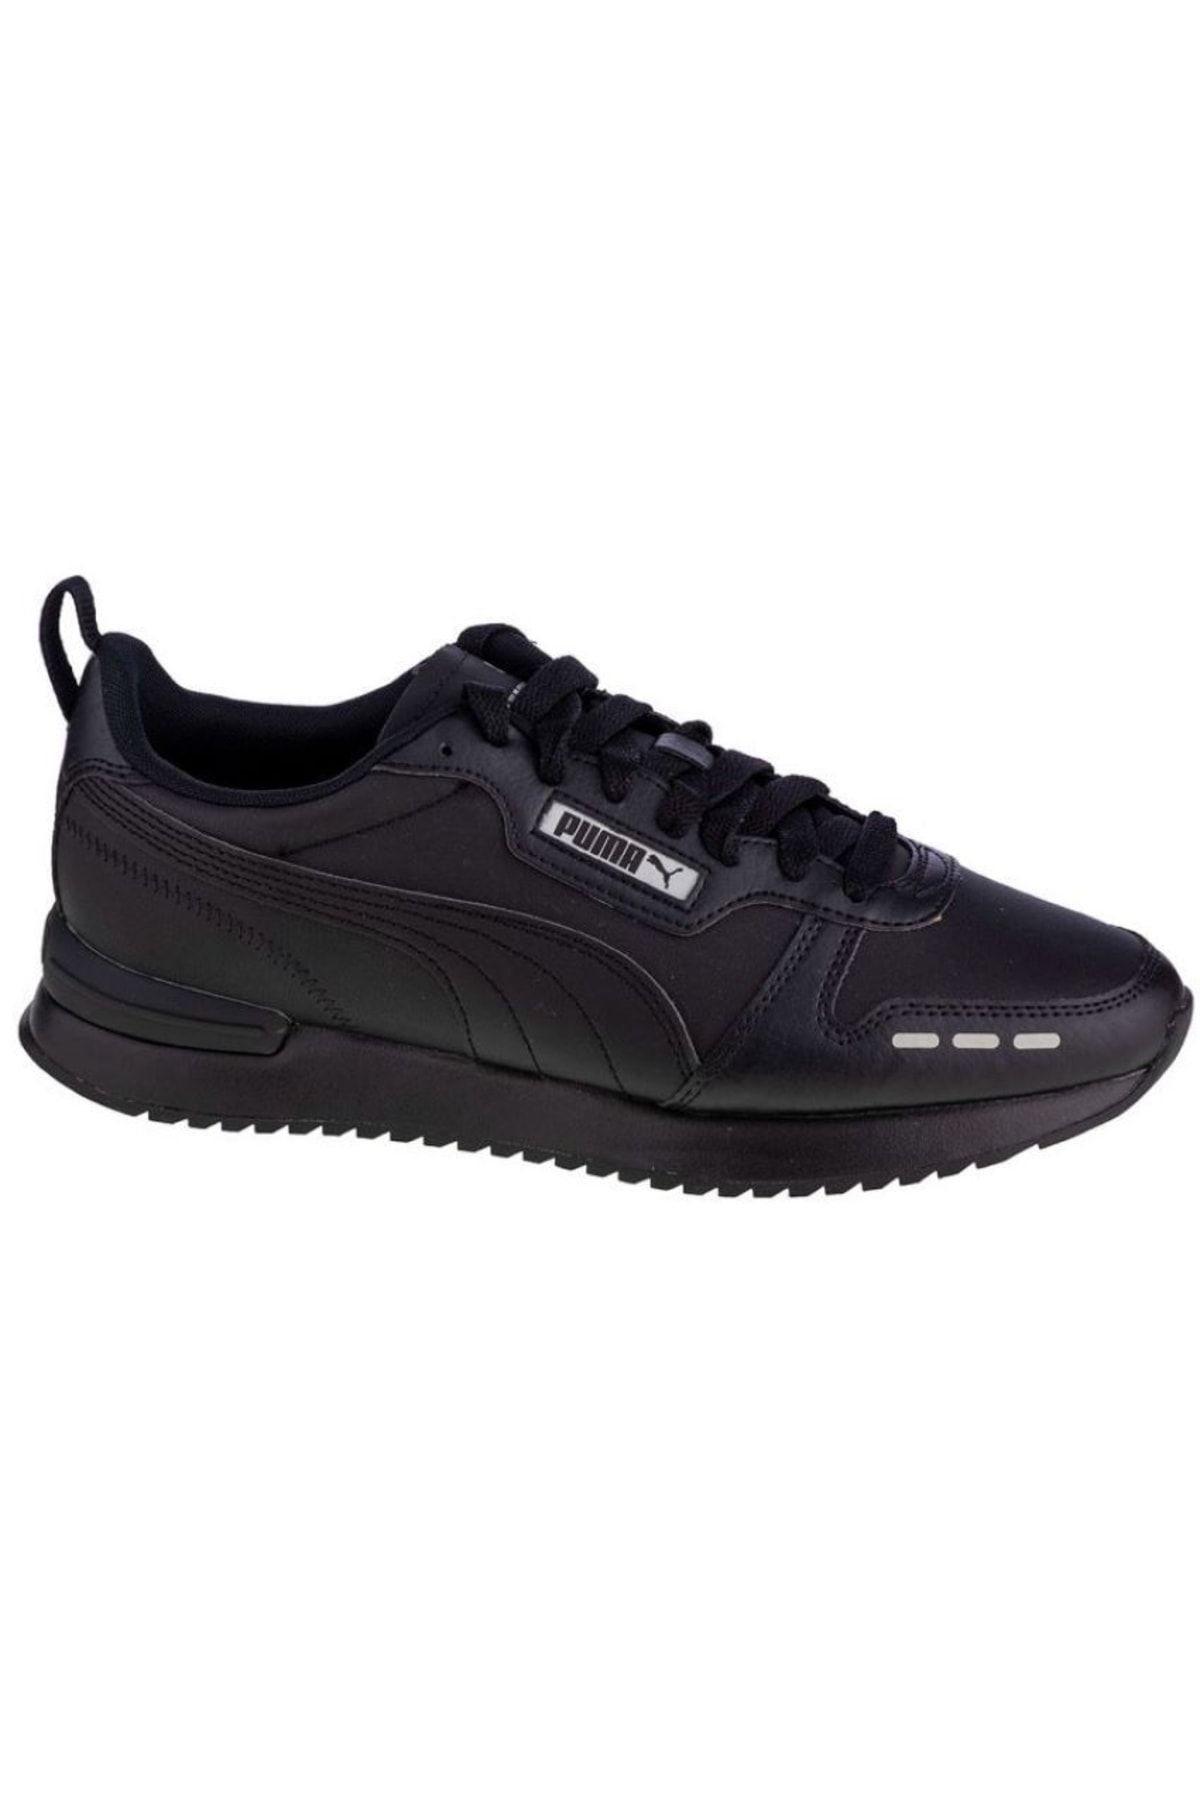 Puma R78 Sl Unisex Spor Ayakkabı Siyah 37412701